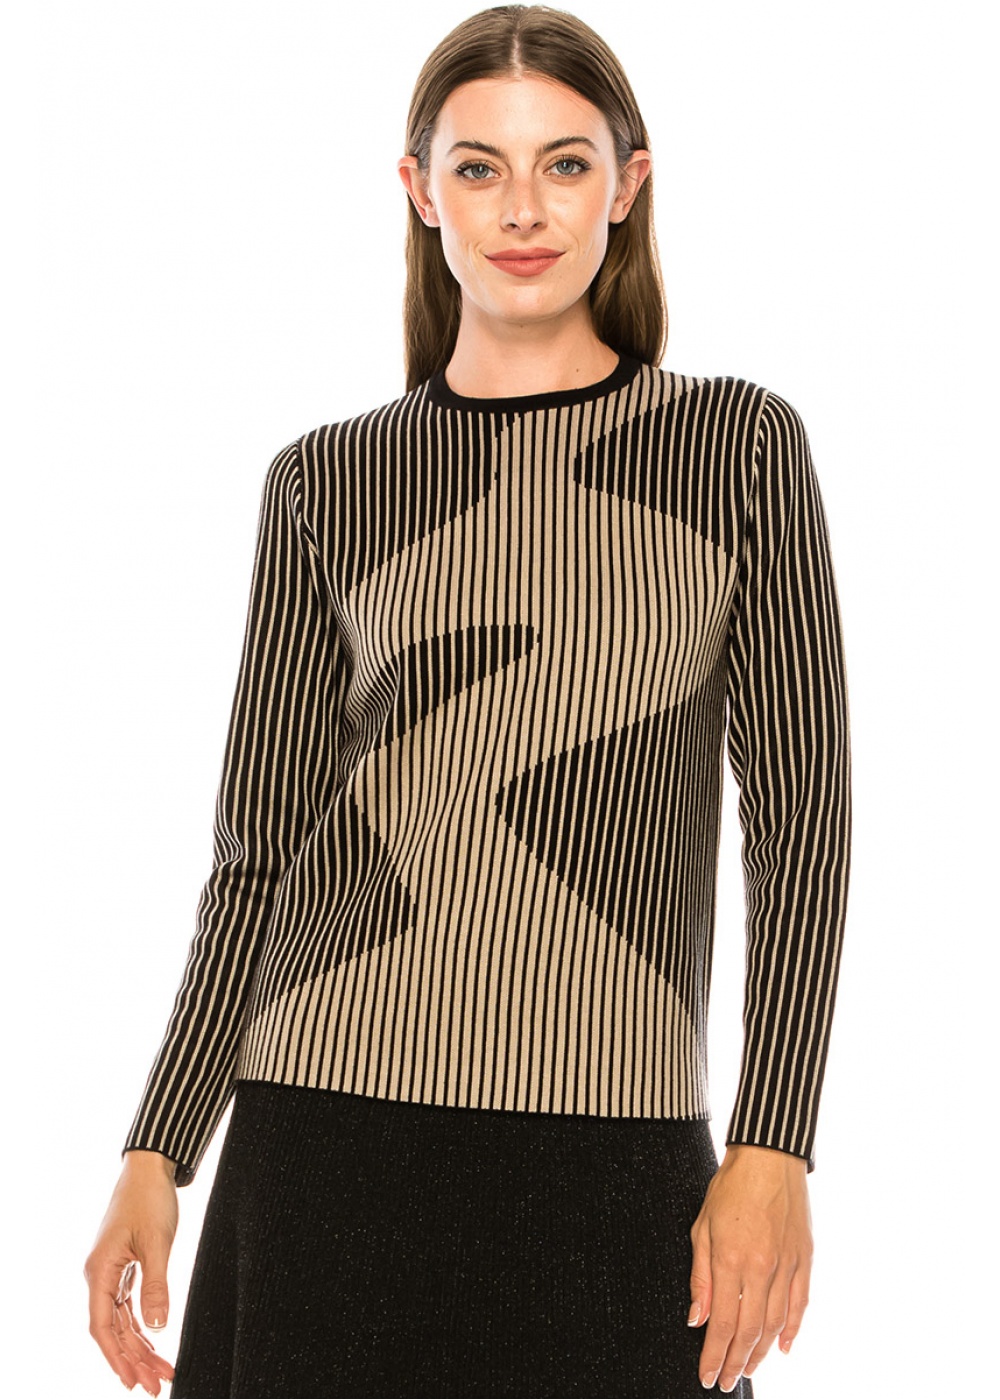 Thin-striped sweater in black